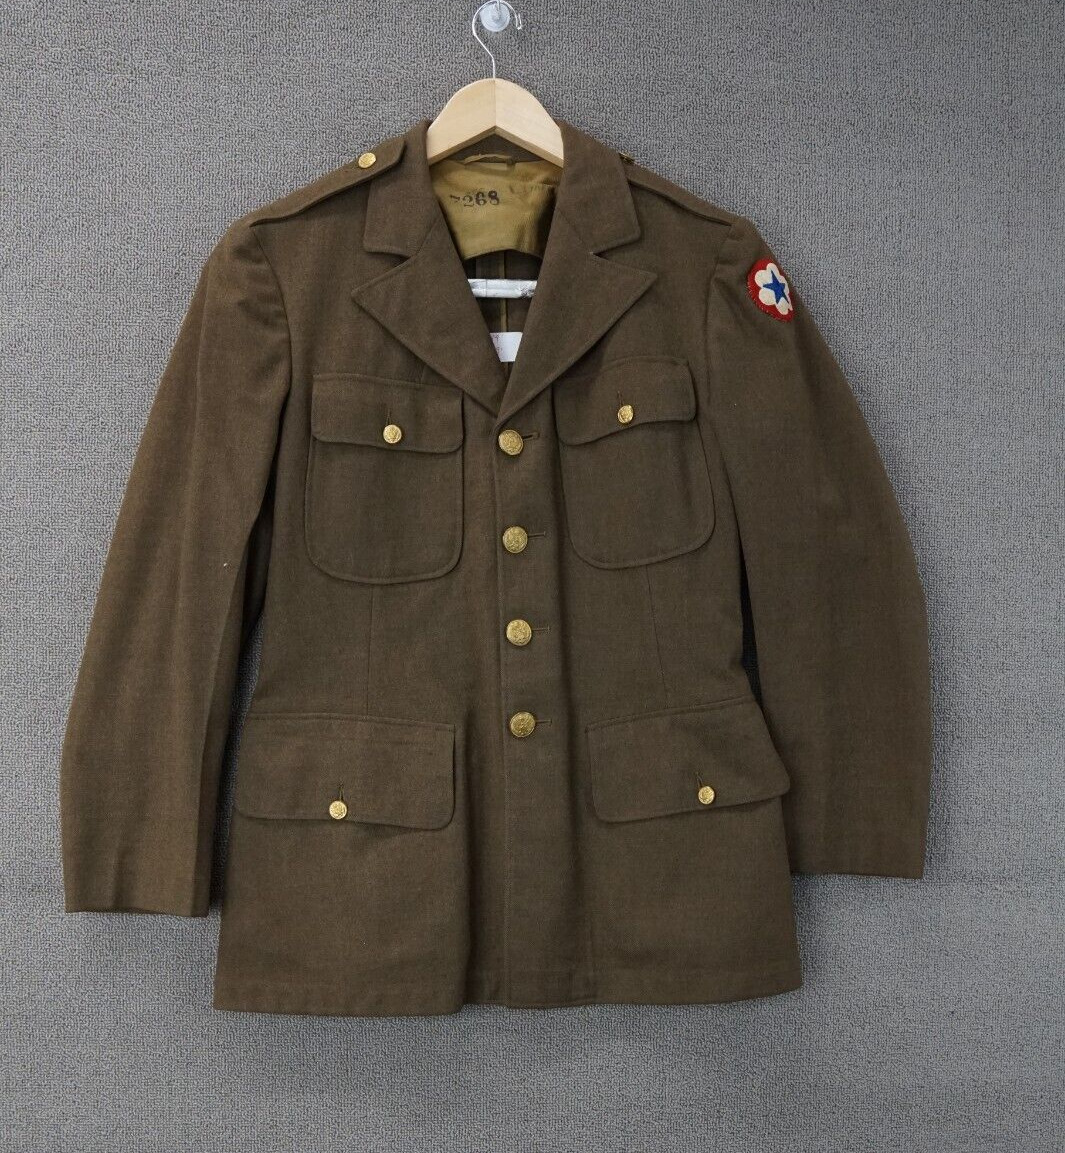 Vintage WWII Military US Army Dress Jacket Size Medium